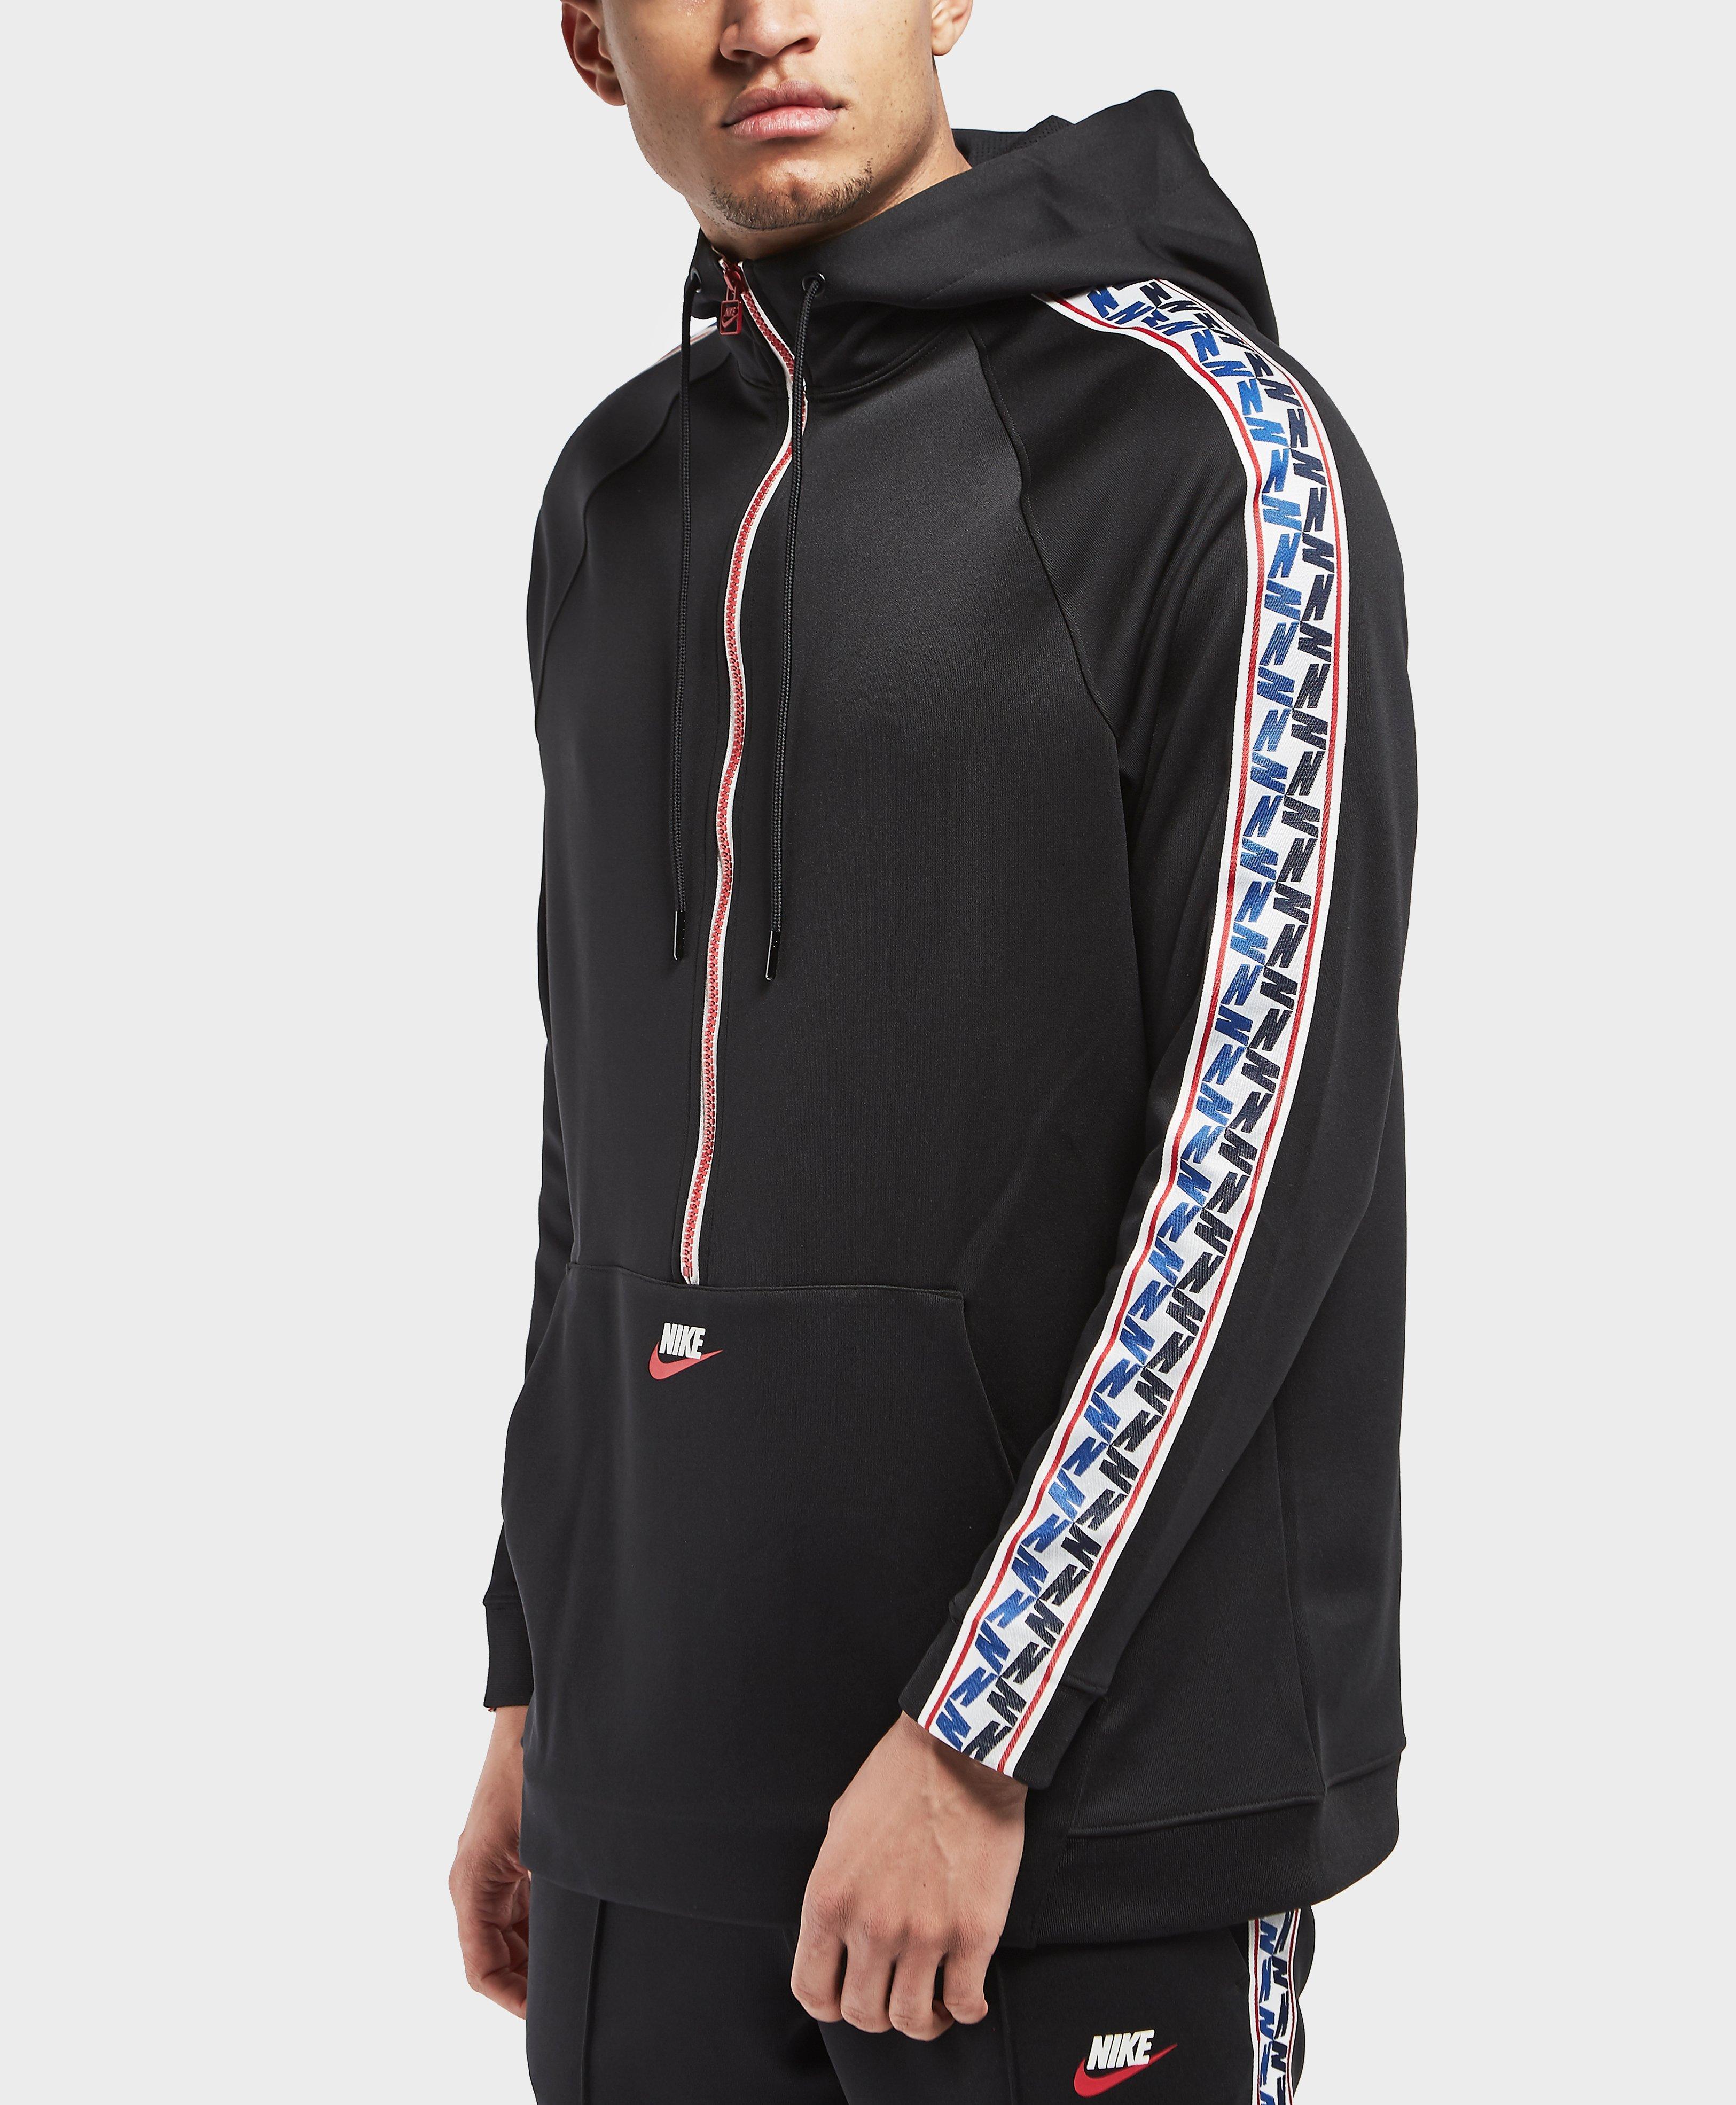 Nike Synthetic Half Zip Taped Poly Hoodie in Black for Men - Lyst